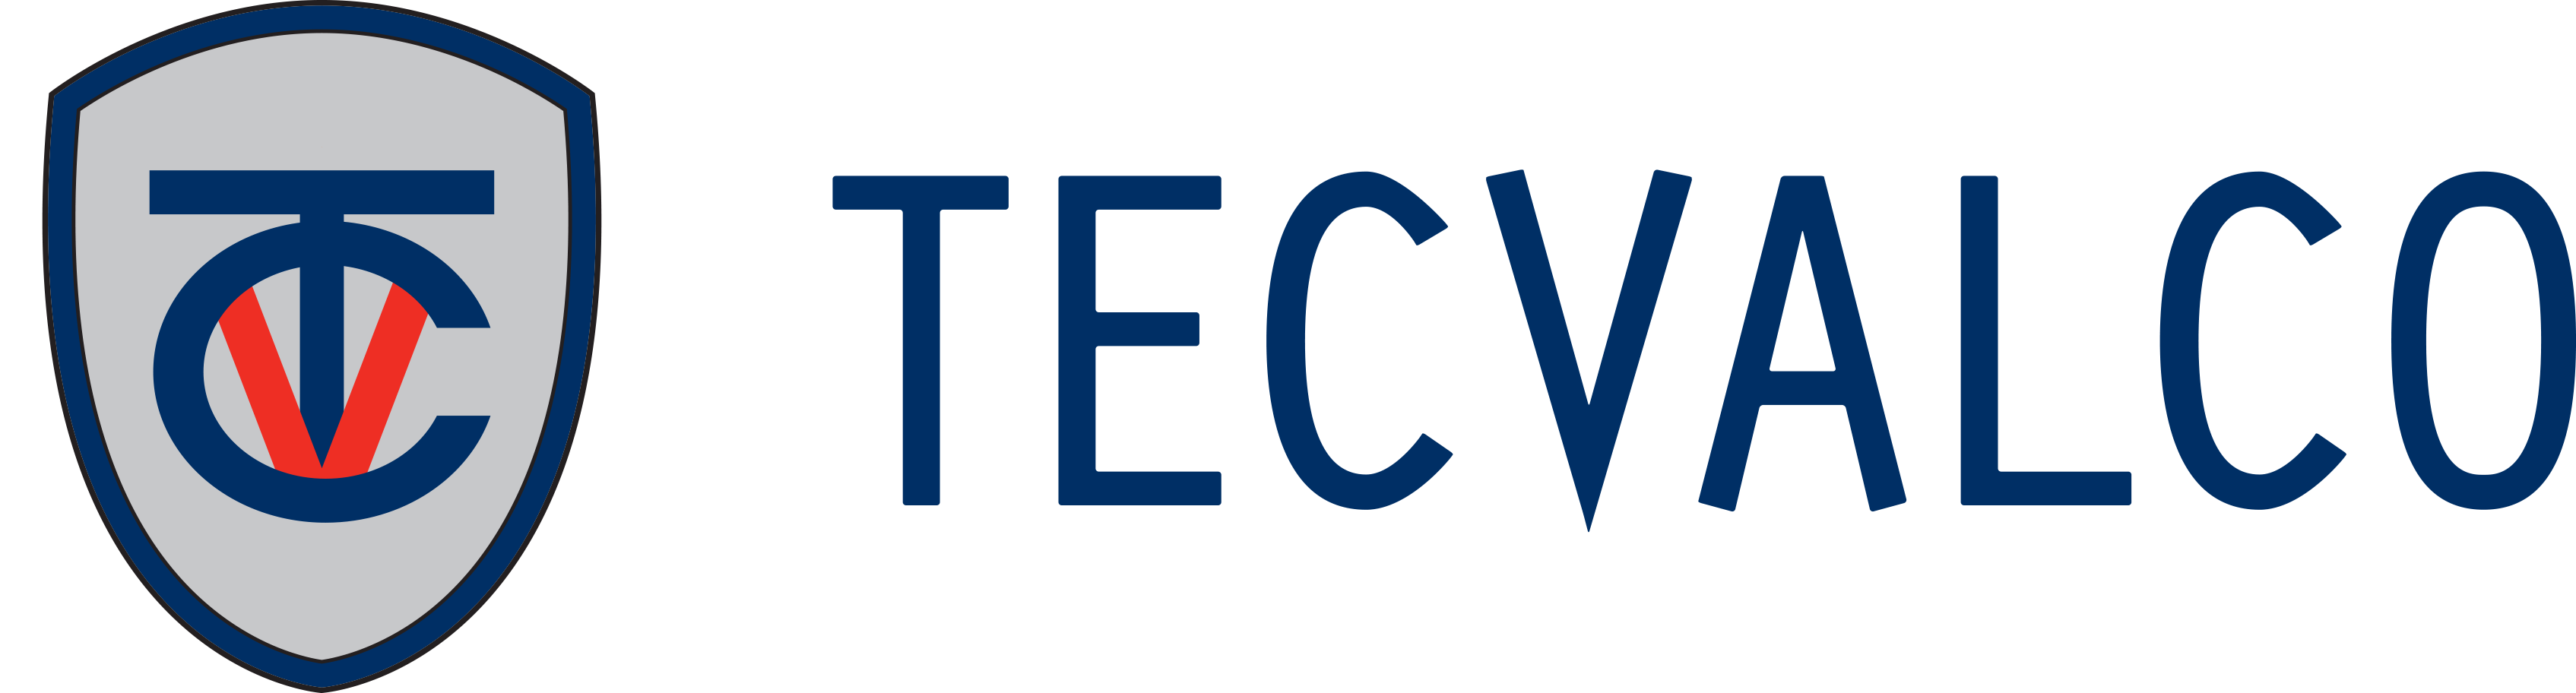 1819-tecvalco-logo-2017-horizontal-spot-colour-16442595601111.png